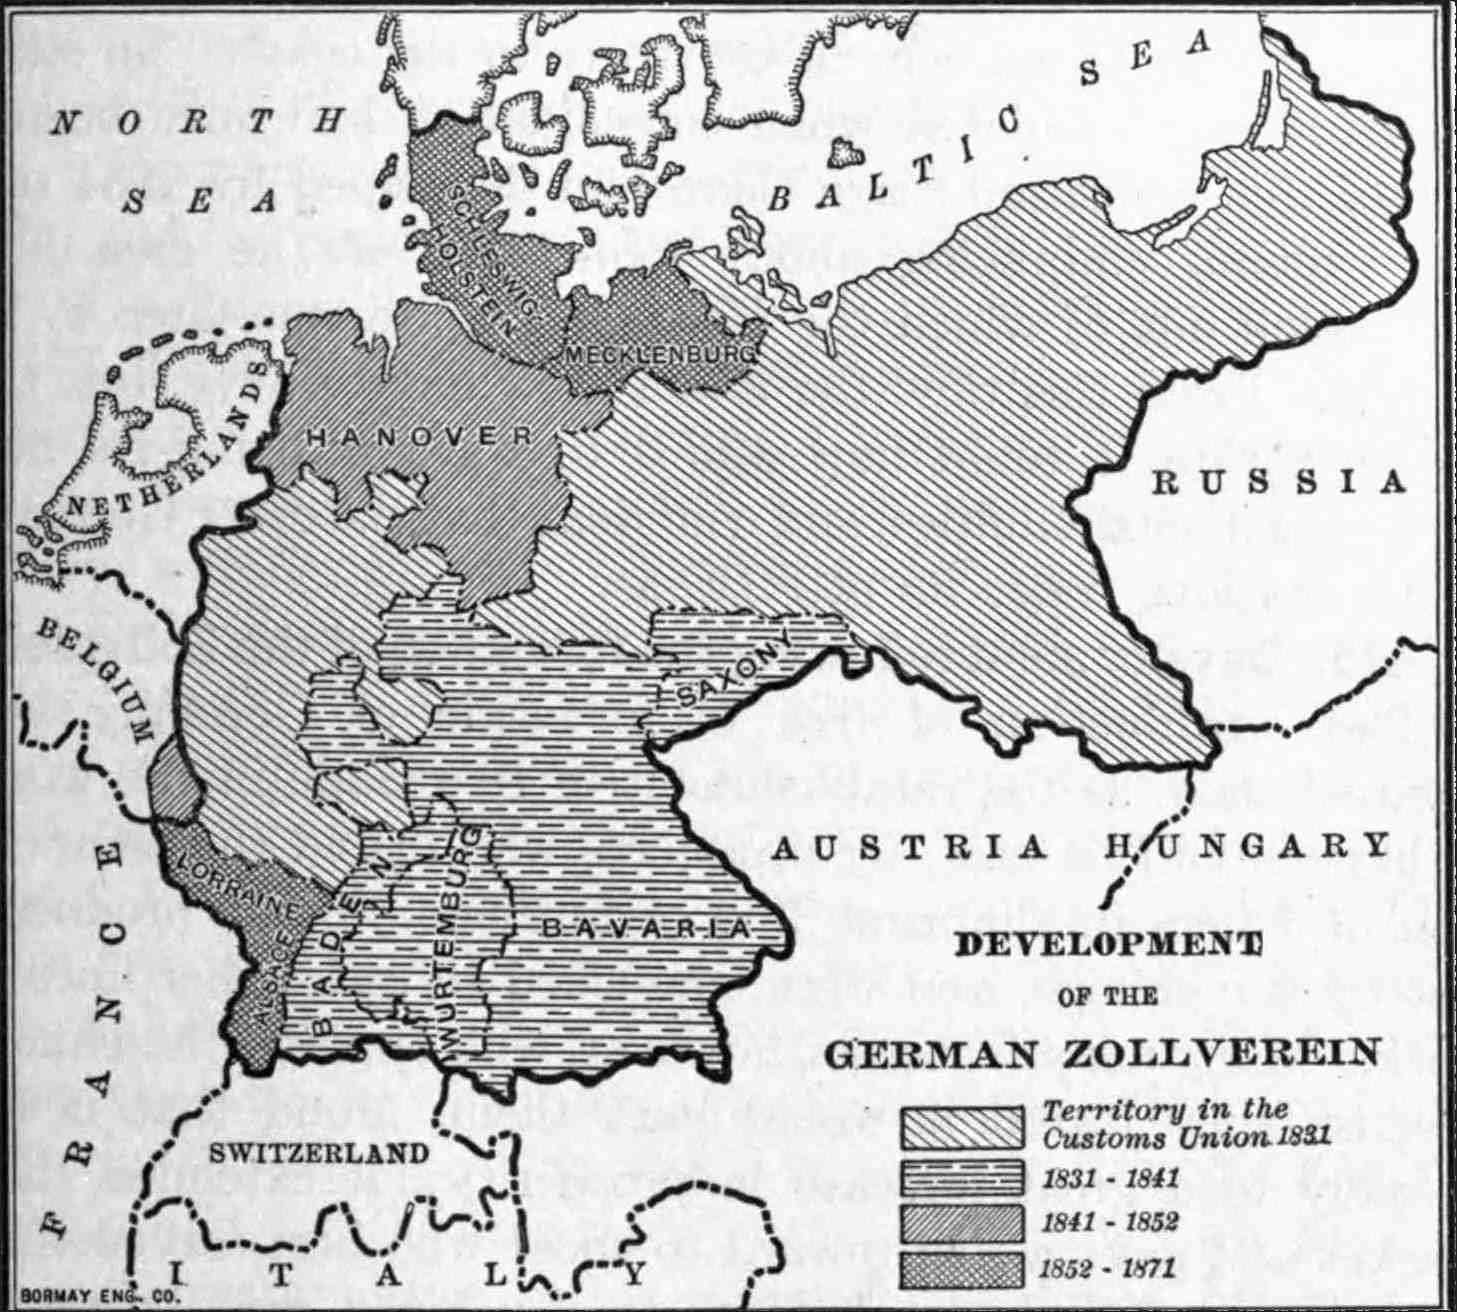 development of the german zollverein